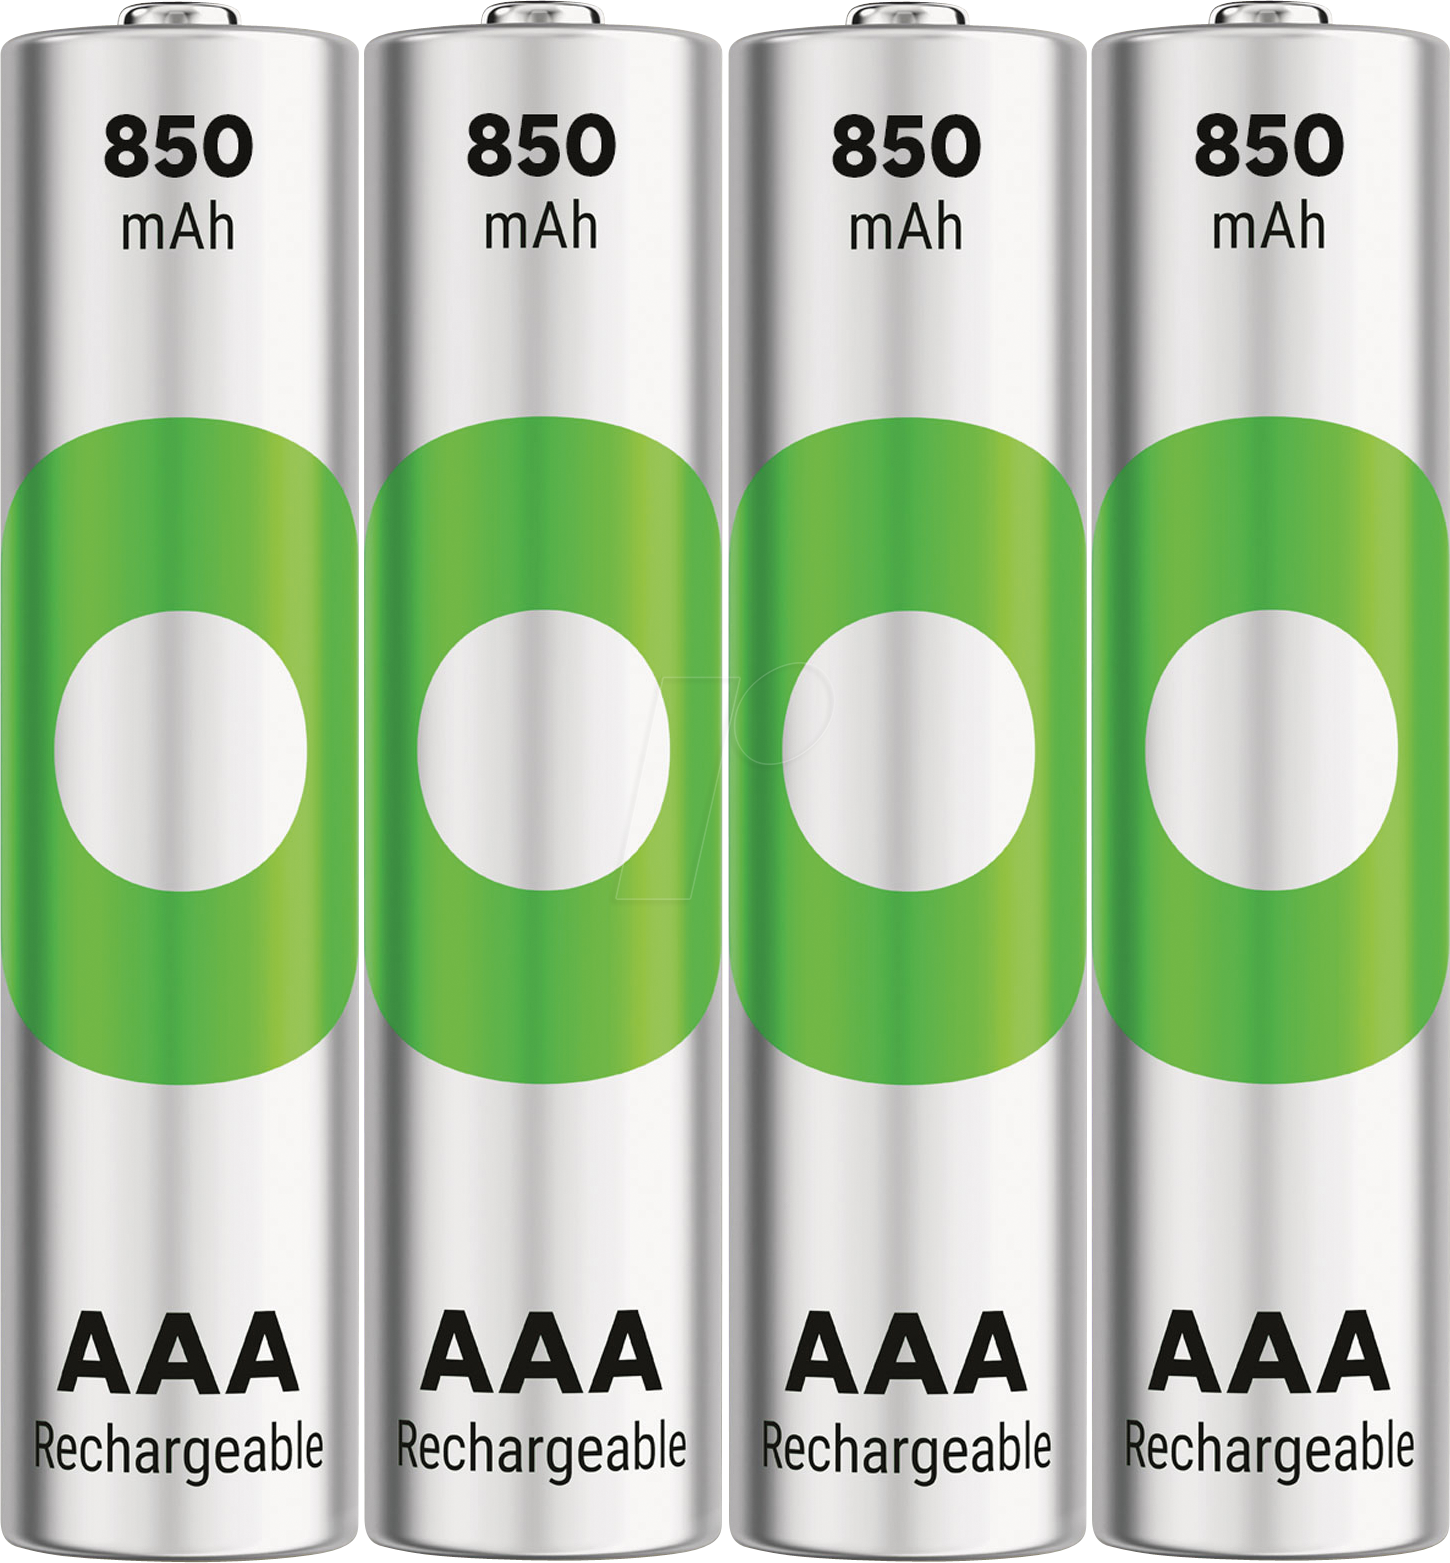 REC 850 4AAA - ReCyko, NiMh-Akku, AAA (Micro), 850 mAh, 4er-Pack von GP-BATTERIES